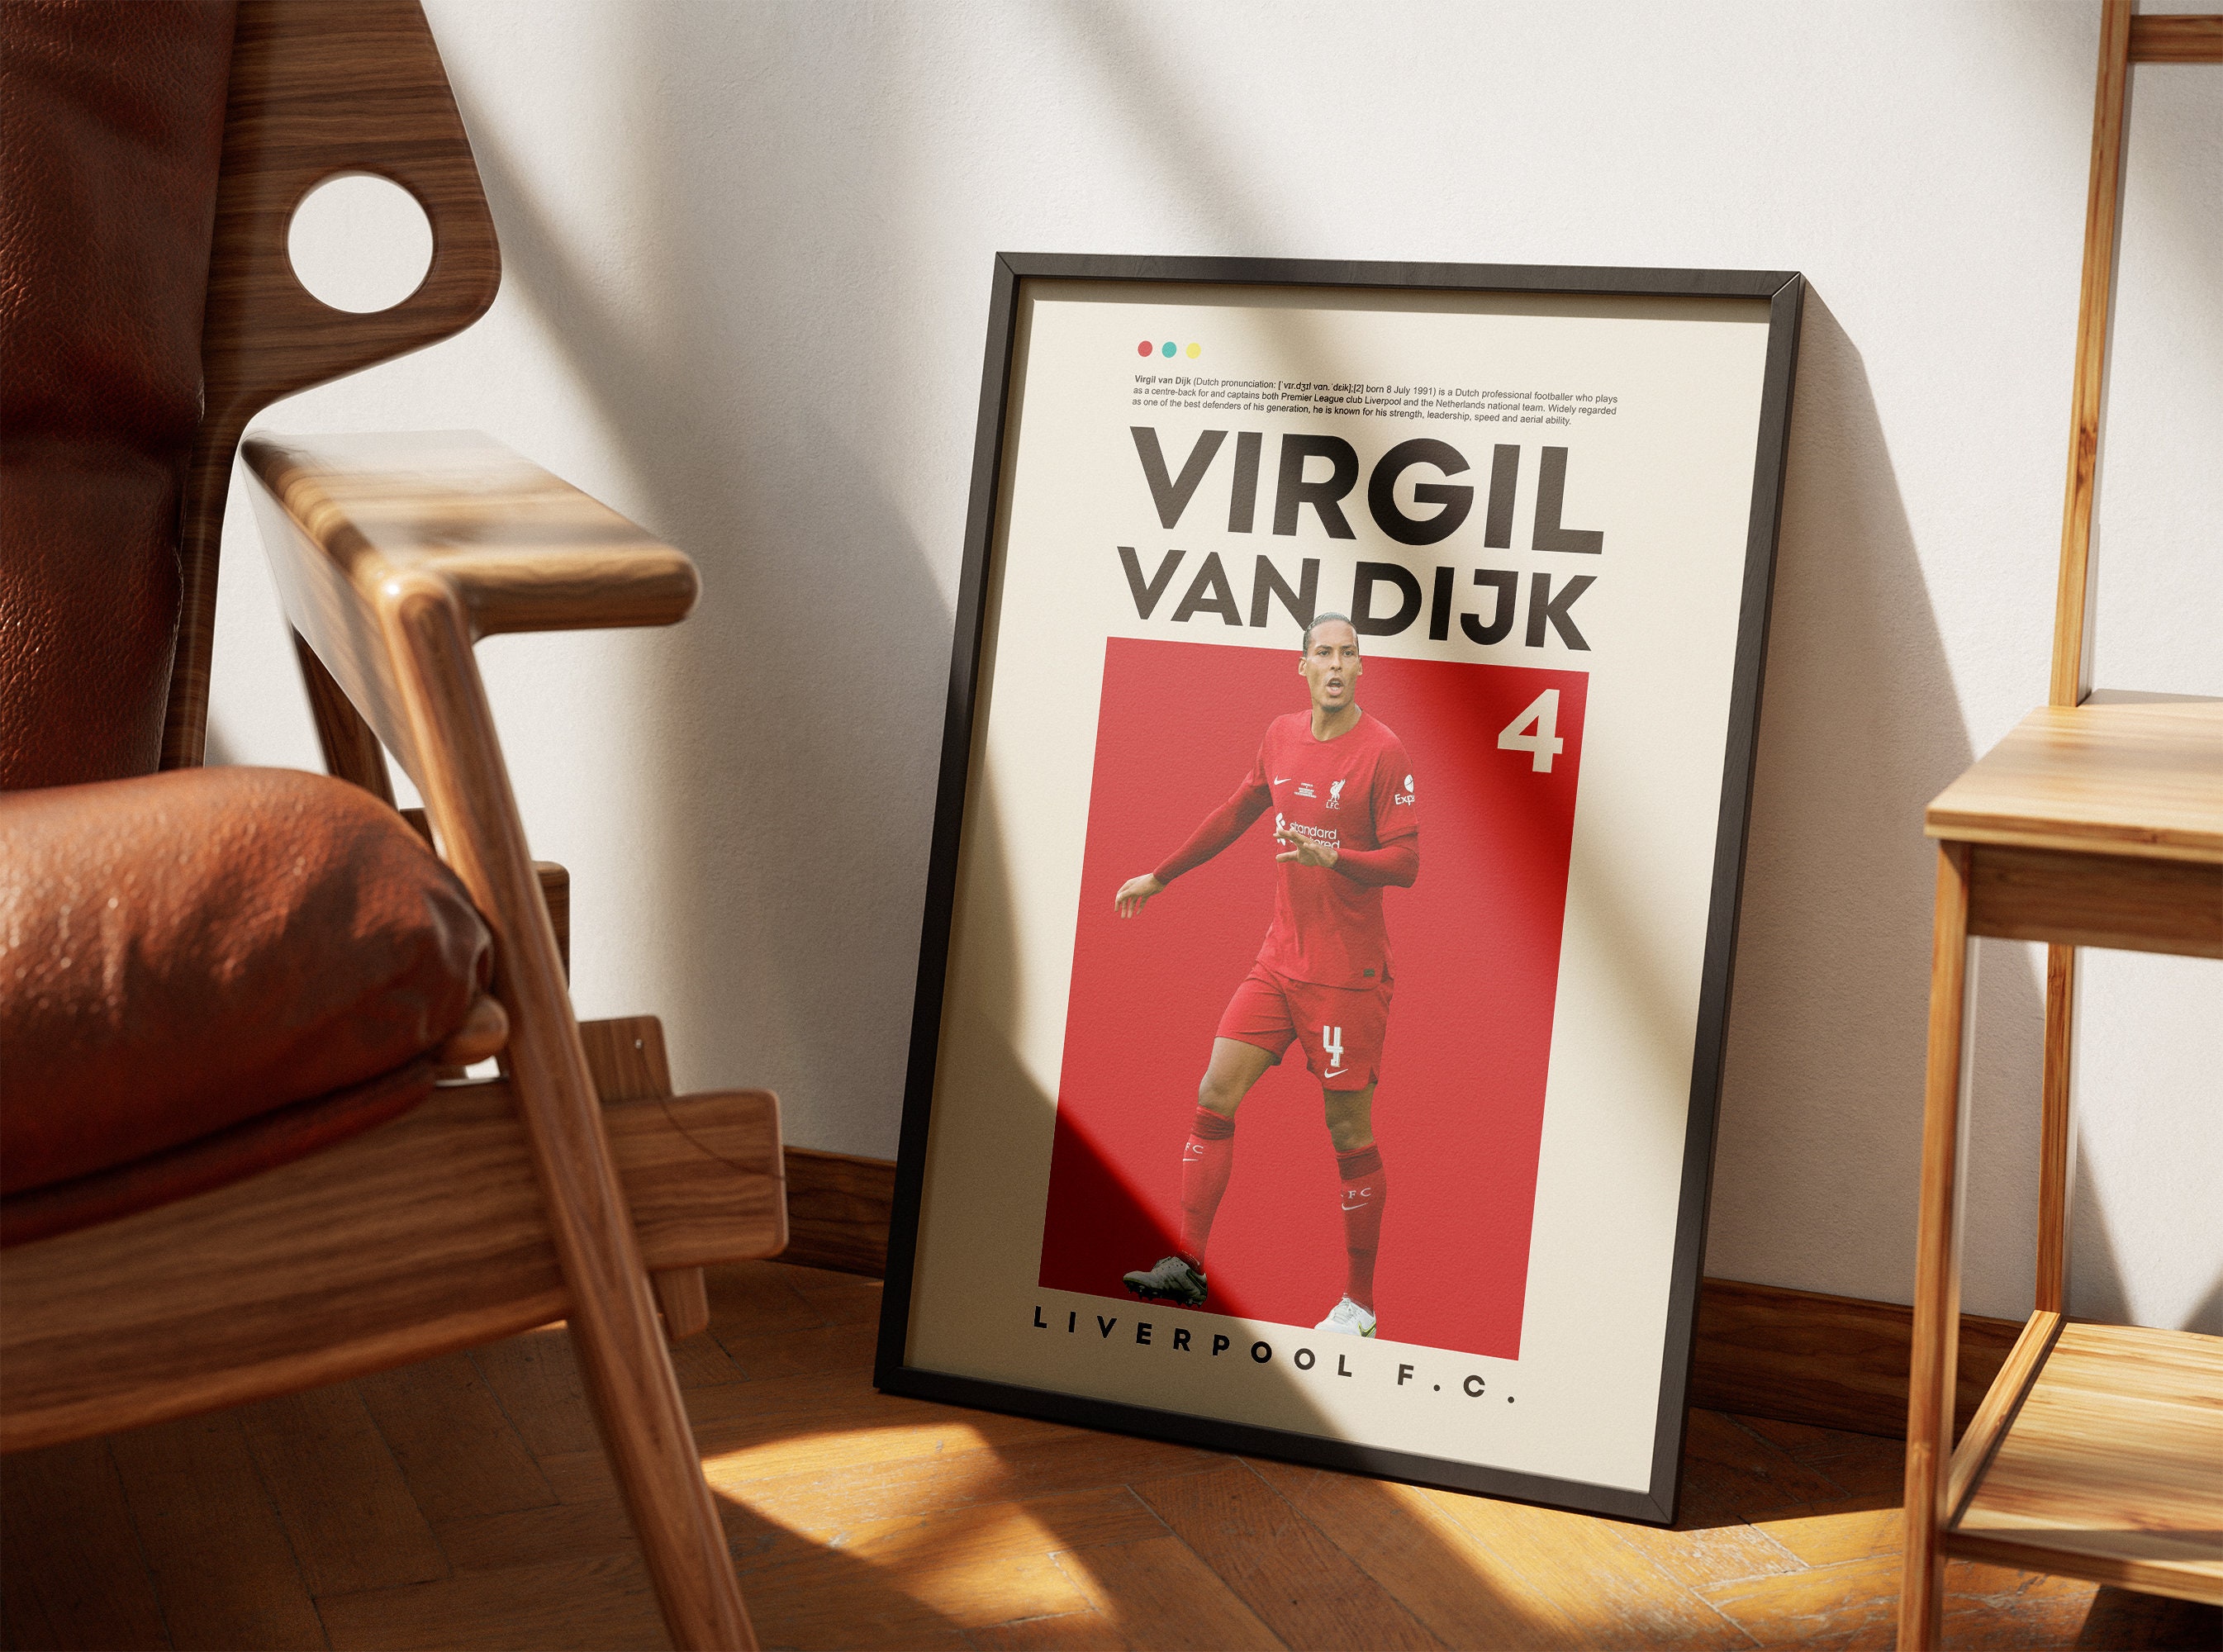 Discover Virgil van Dijk Poster, Liverpool Poster, Virgil van Dijk Print Art, Office Wall Art, Bedroom Art, Gift Poster, Dutch Footballer